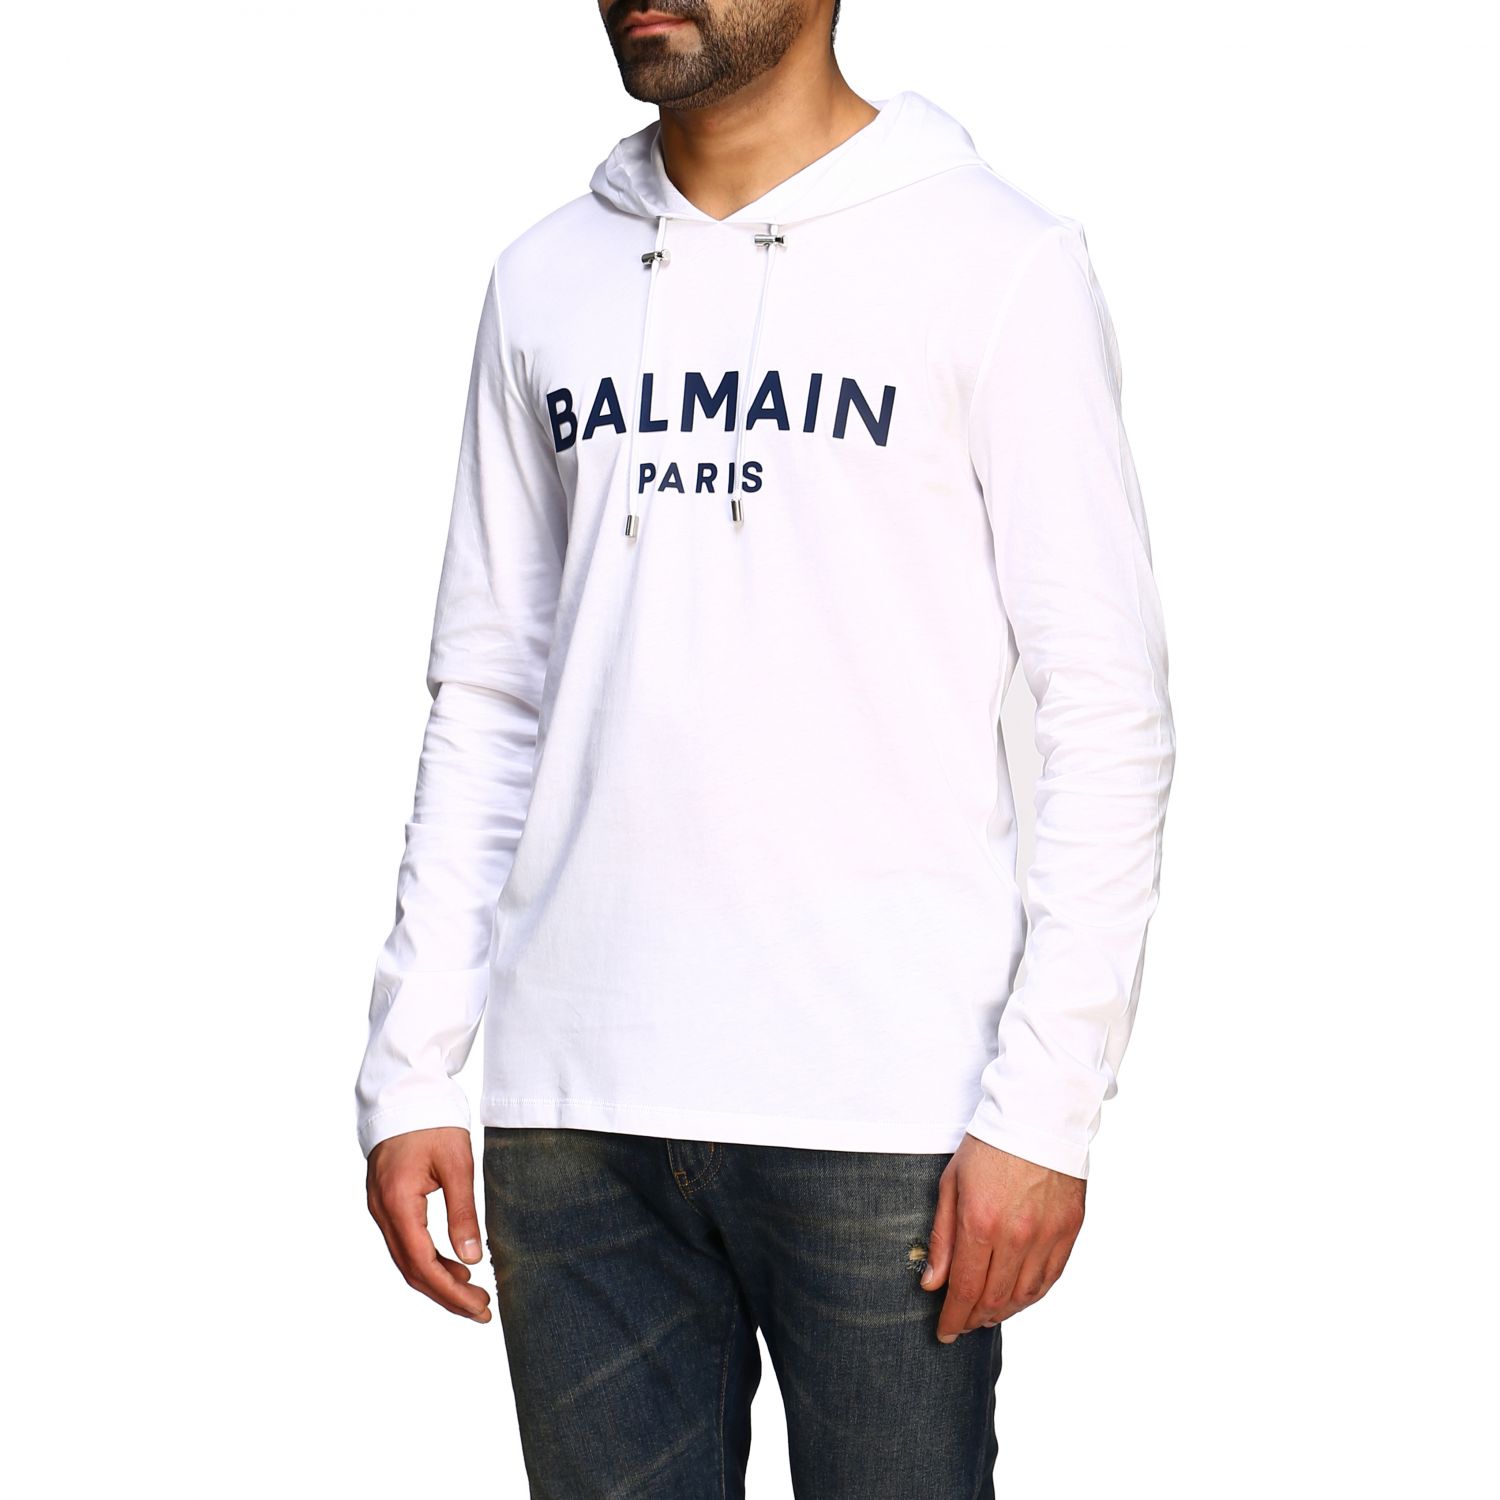 Balmain Outlet: sweatshirt with hood and logo - White Balmain sweatshirt online at